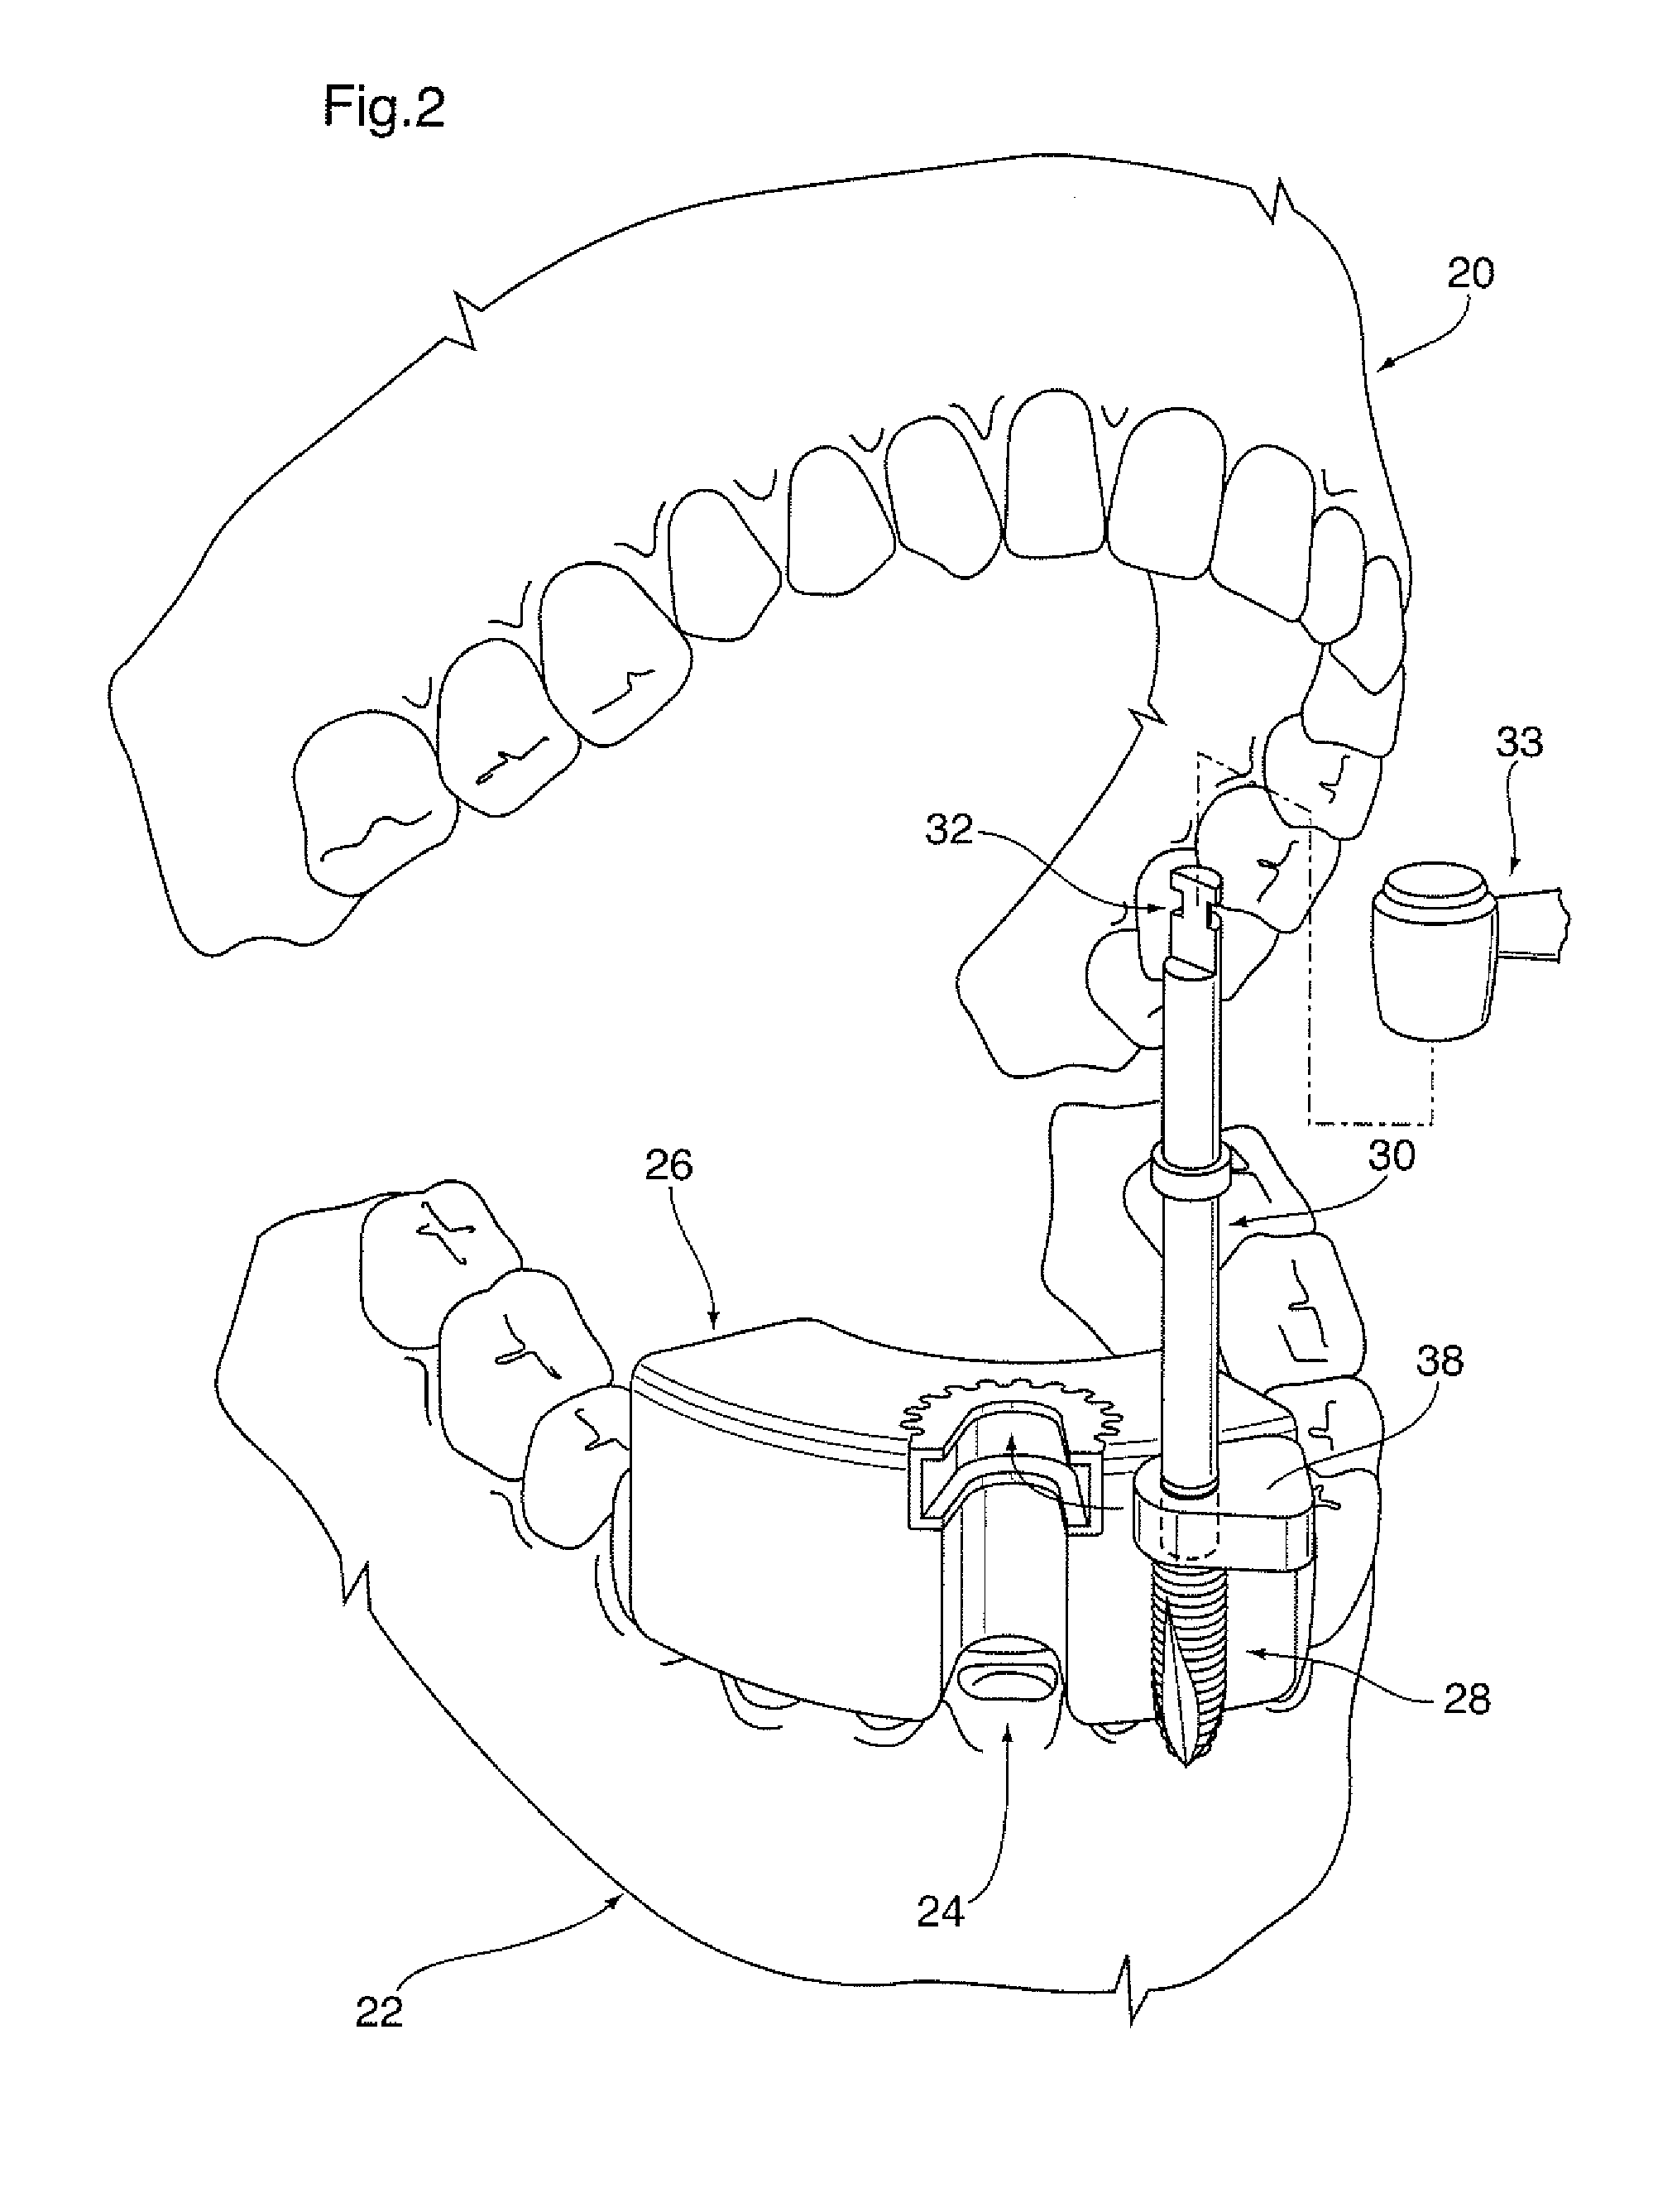 Dental implant positioning system